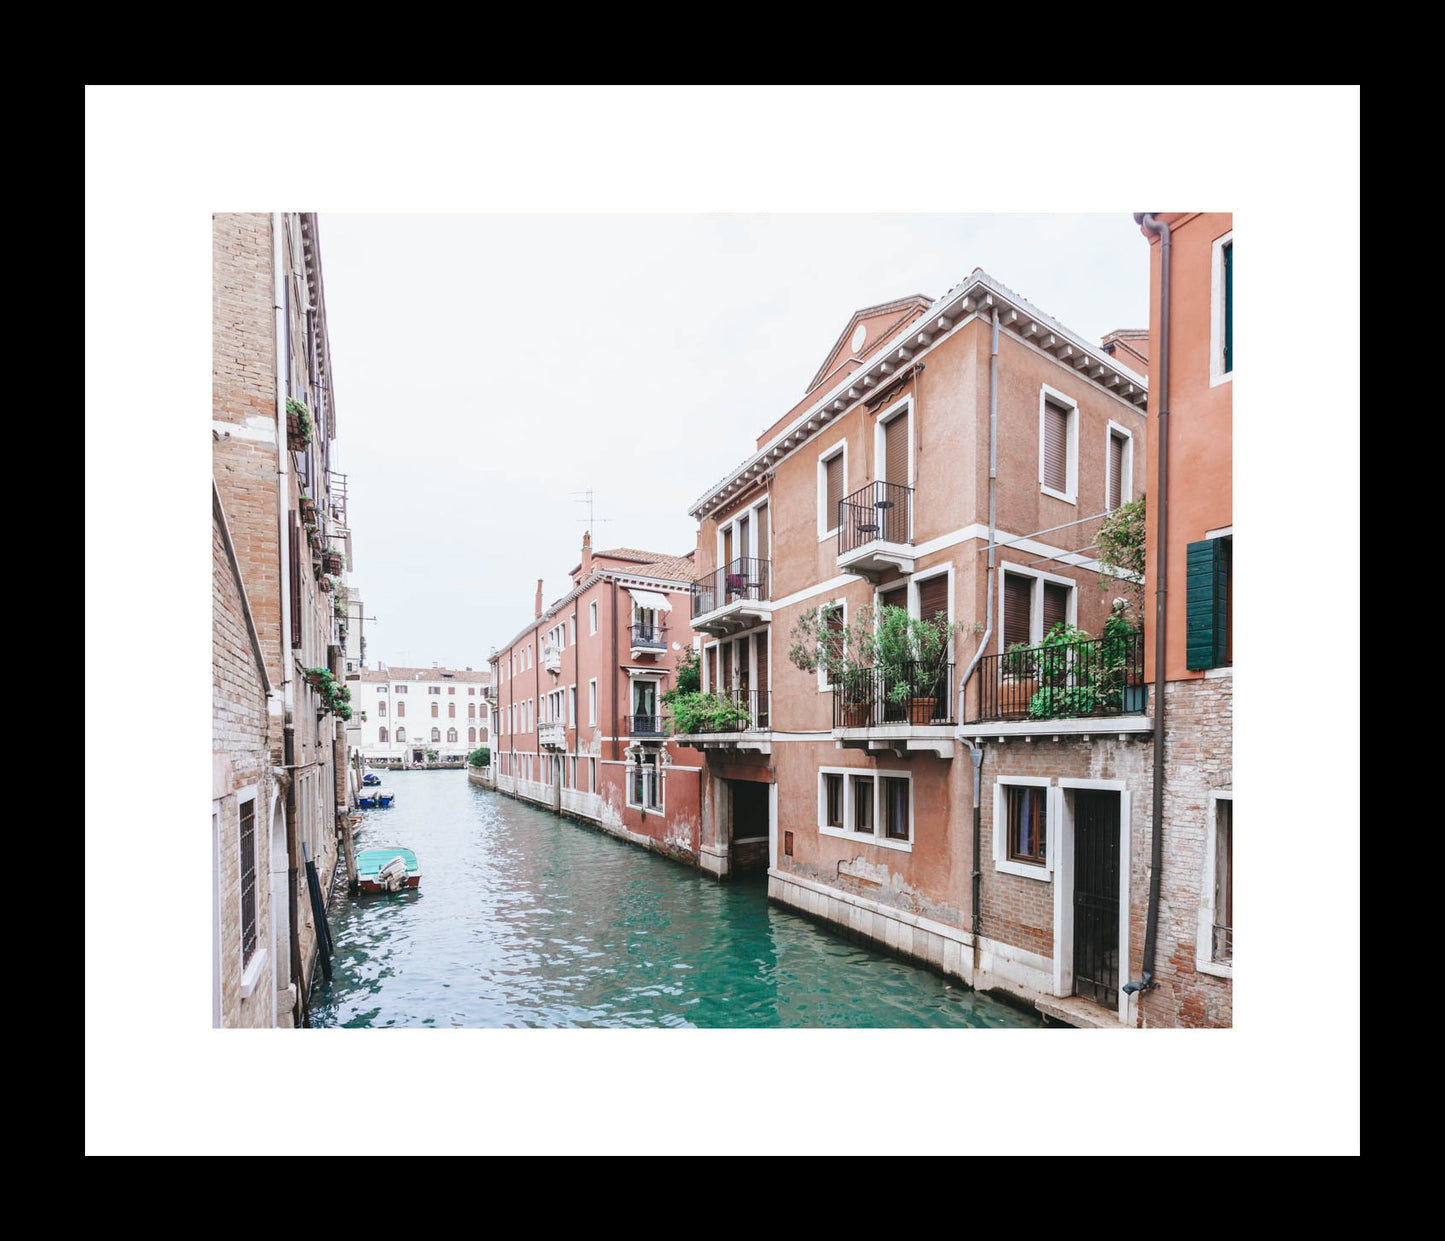 Venice Italy Photography Prints, Unframed Artwork, European Vacation Travel Gift, Living Room Wall Art, Canal Landscape, Hello, Venezia - eireanneilis